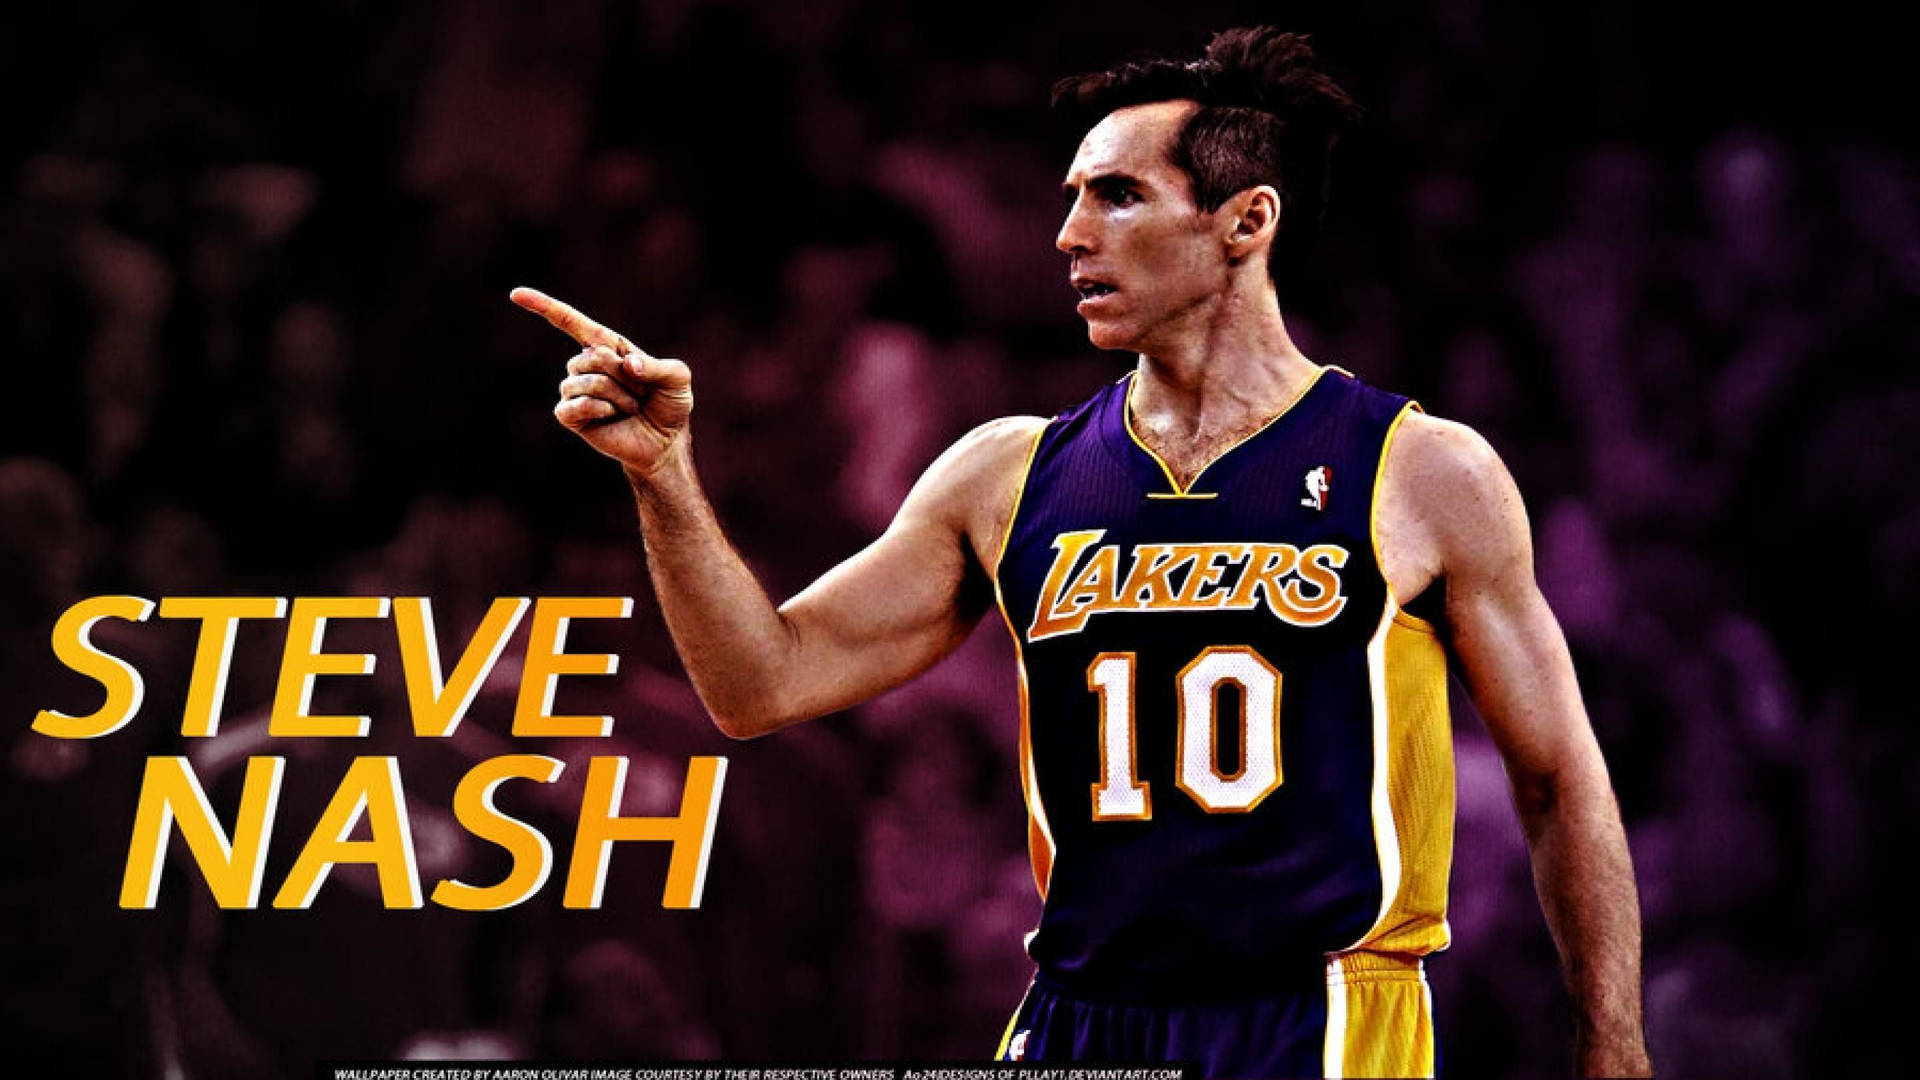 Stevenash Zeigt Auf Die Lakers Wallpaper